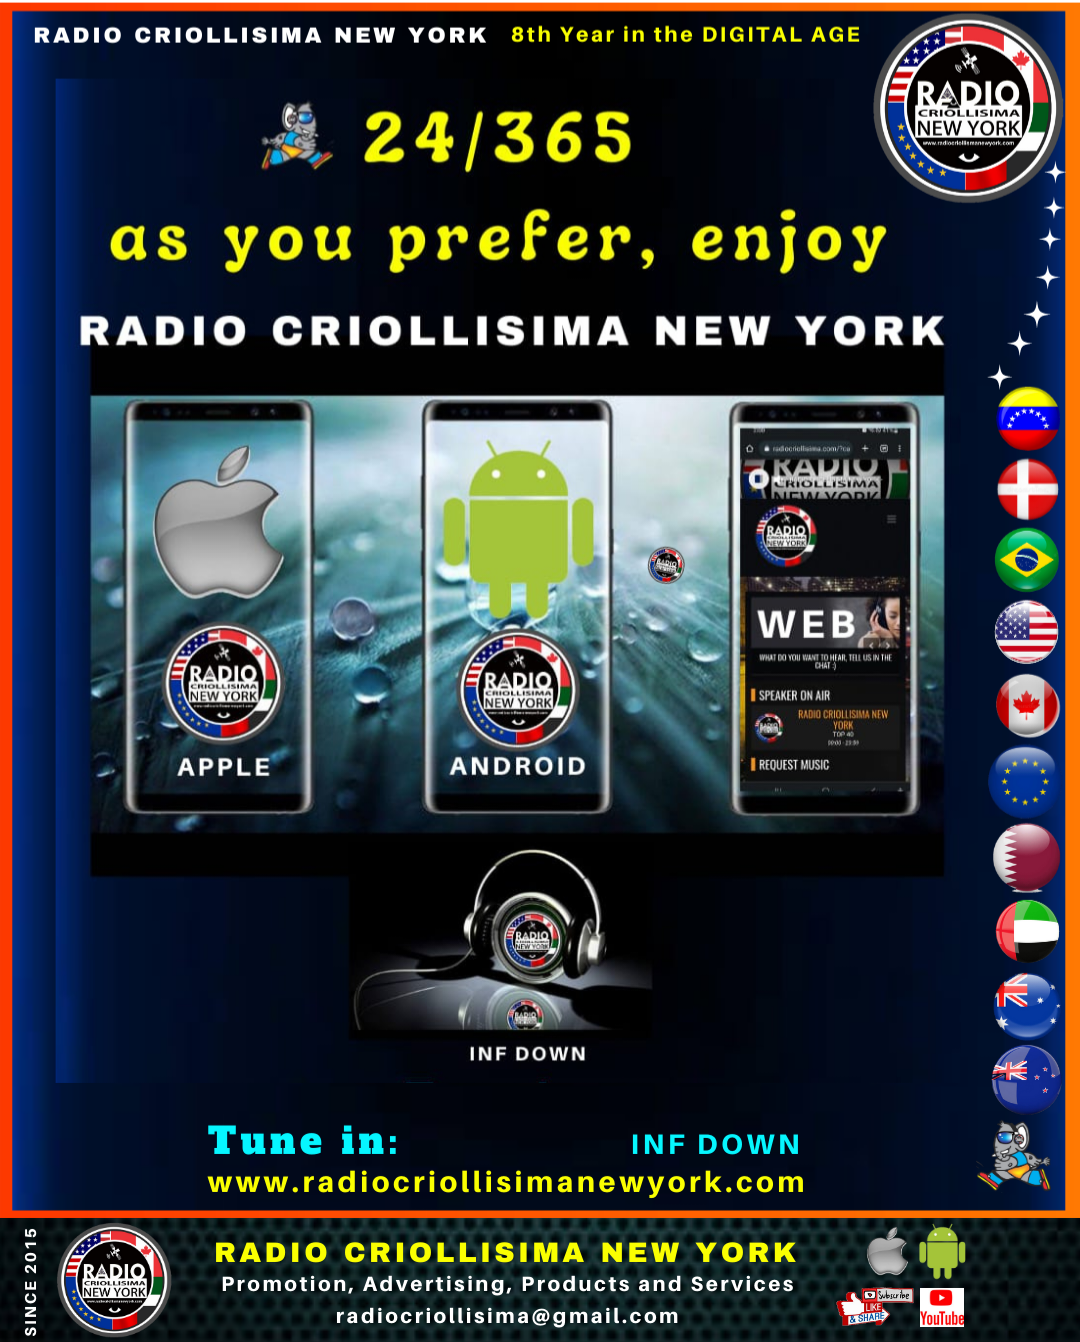 RADIO CRIOLLISIMA NEW YORK